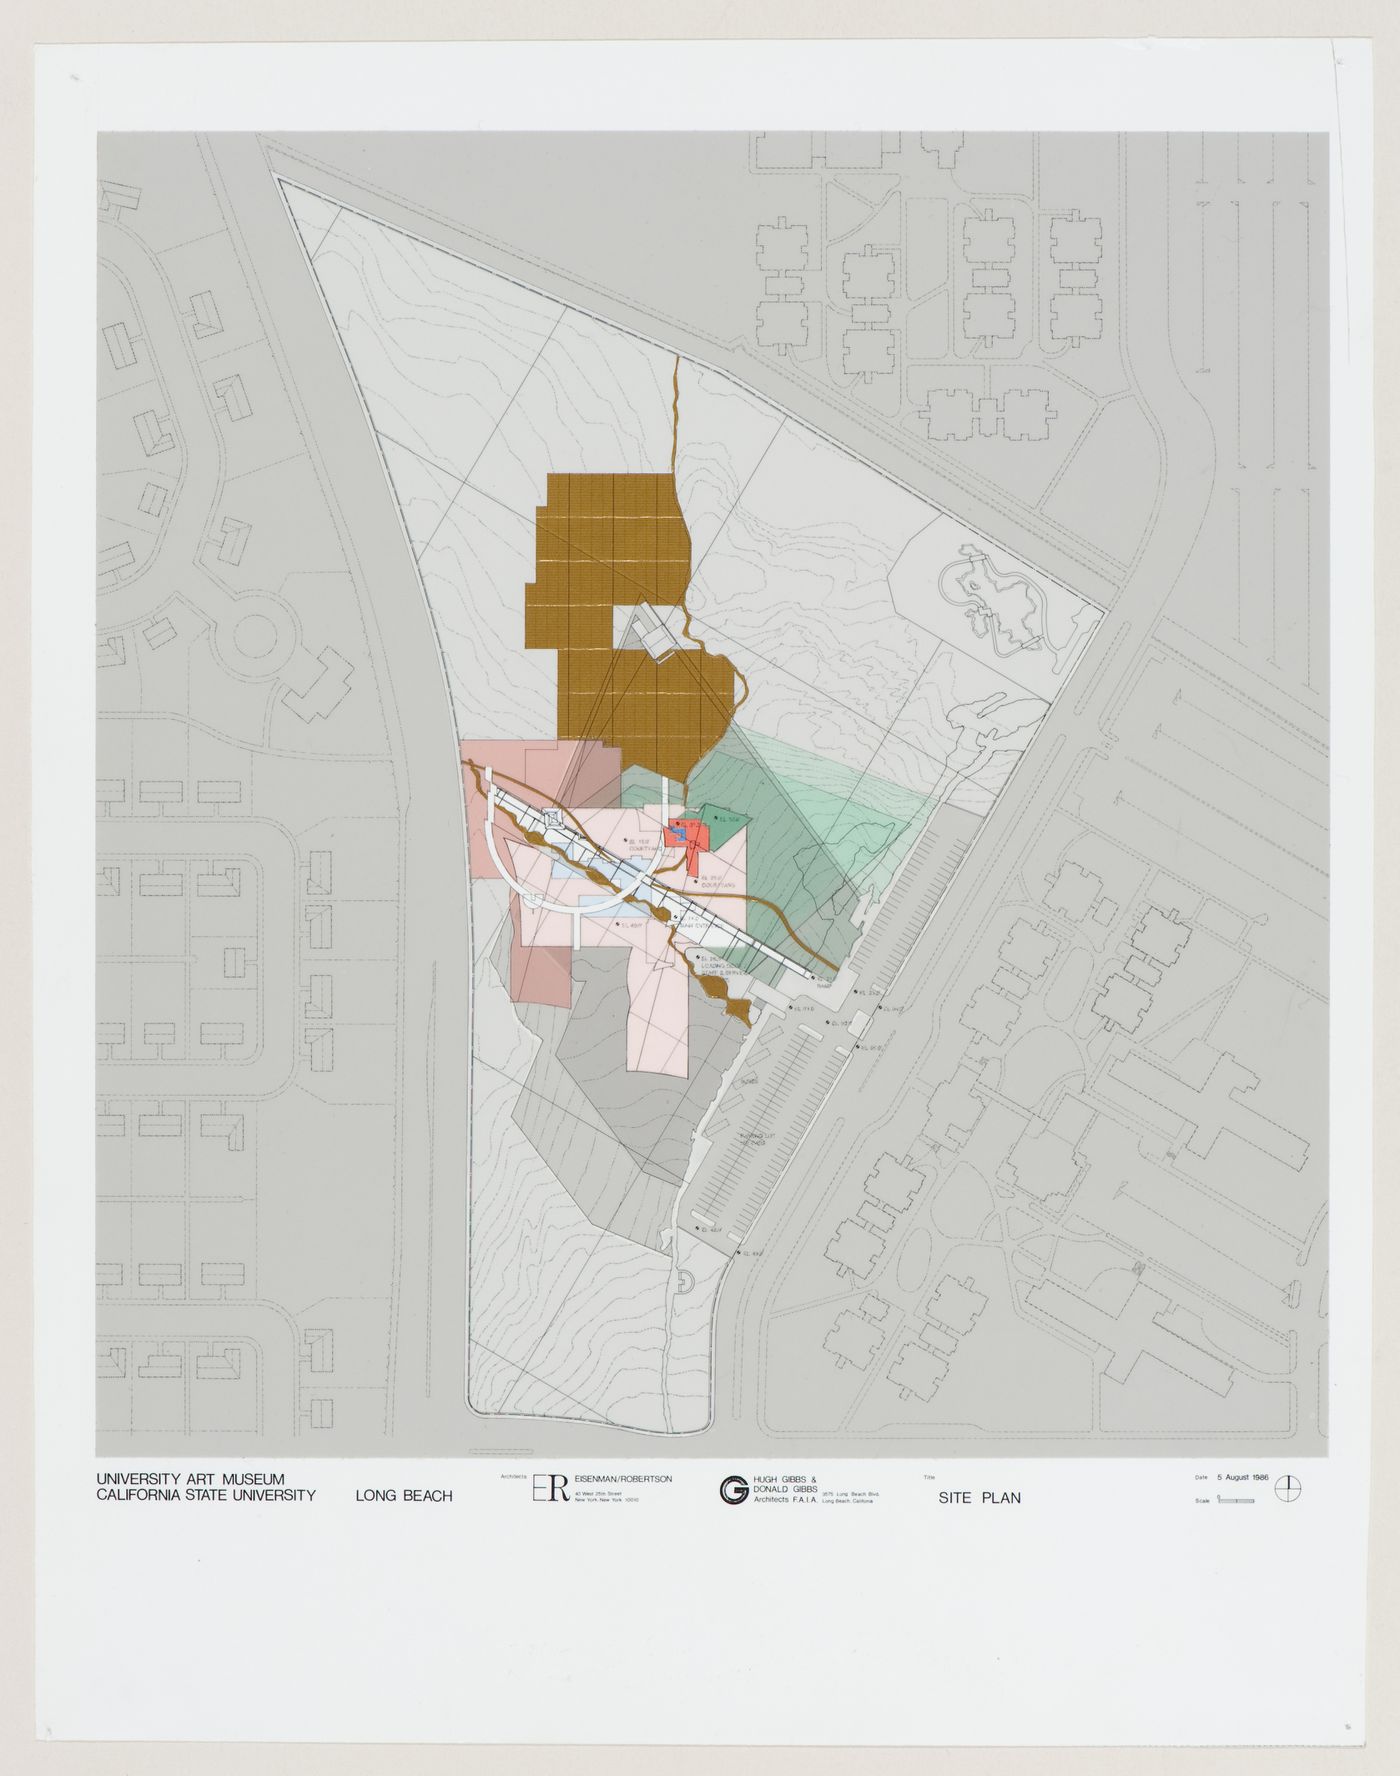 Site plan for University Art Museum, Long Beach, California